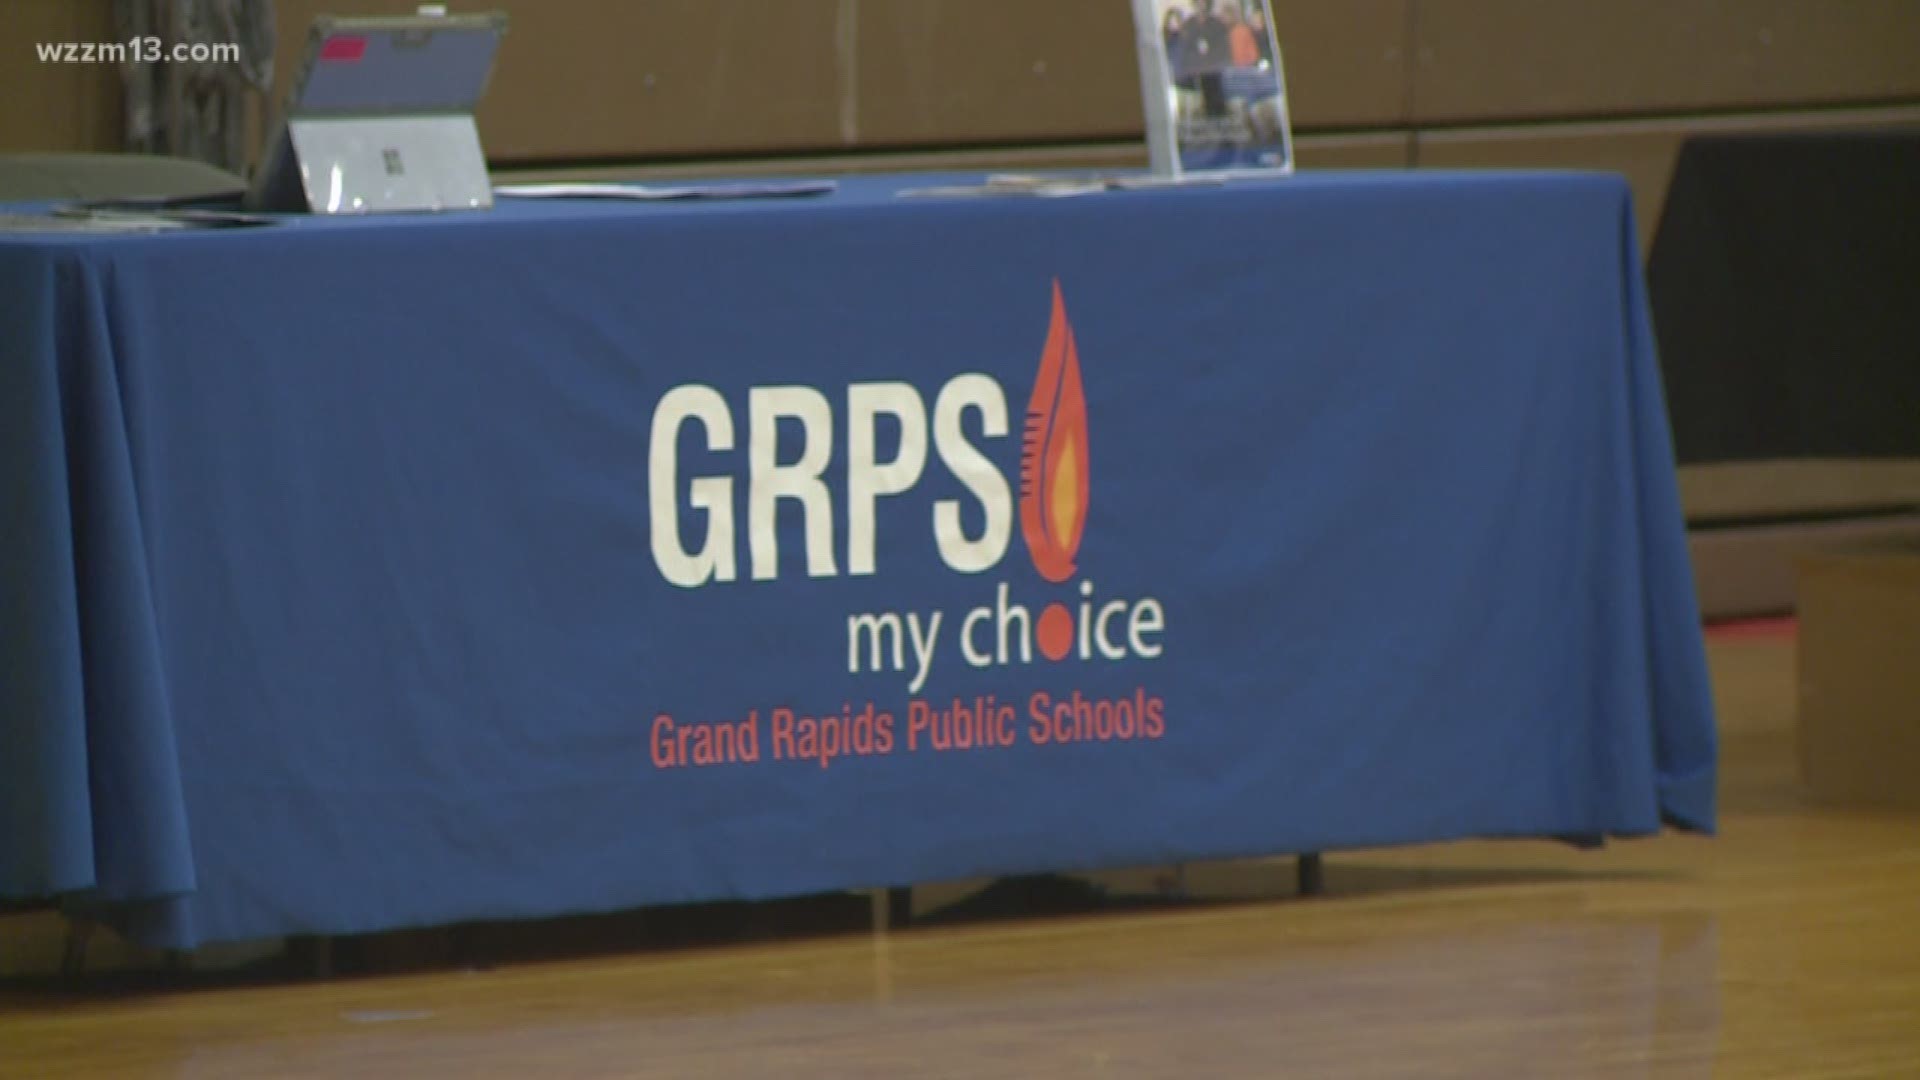 Grand Rapids Public Schools hosts school choice event